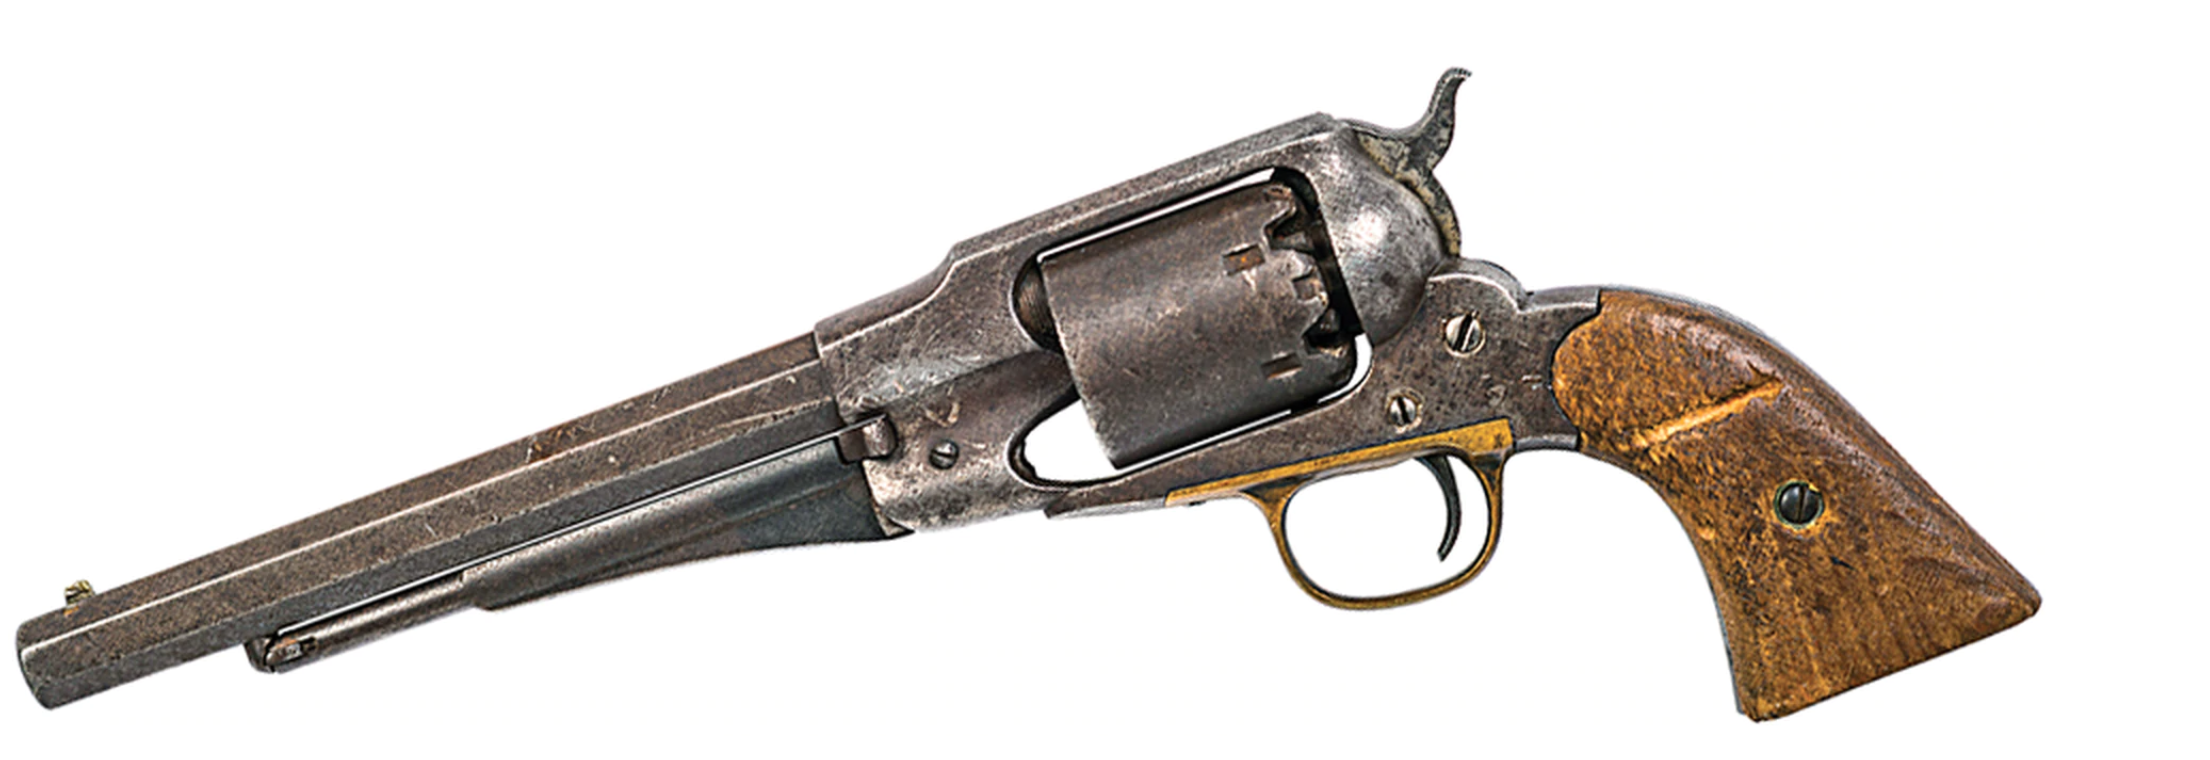 Colt Revolvers Guns The World's Right Arm Cowboy Metal Tin Sign Vintage Pistol 